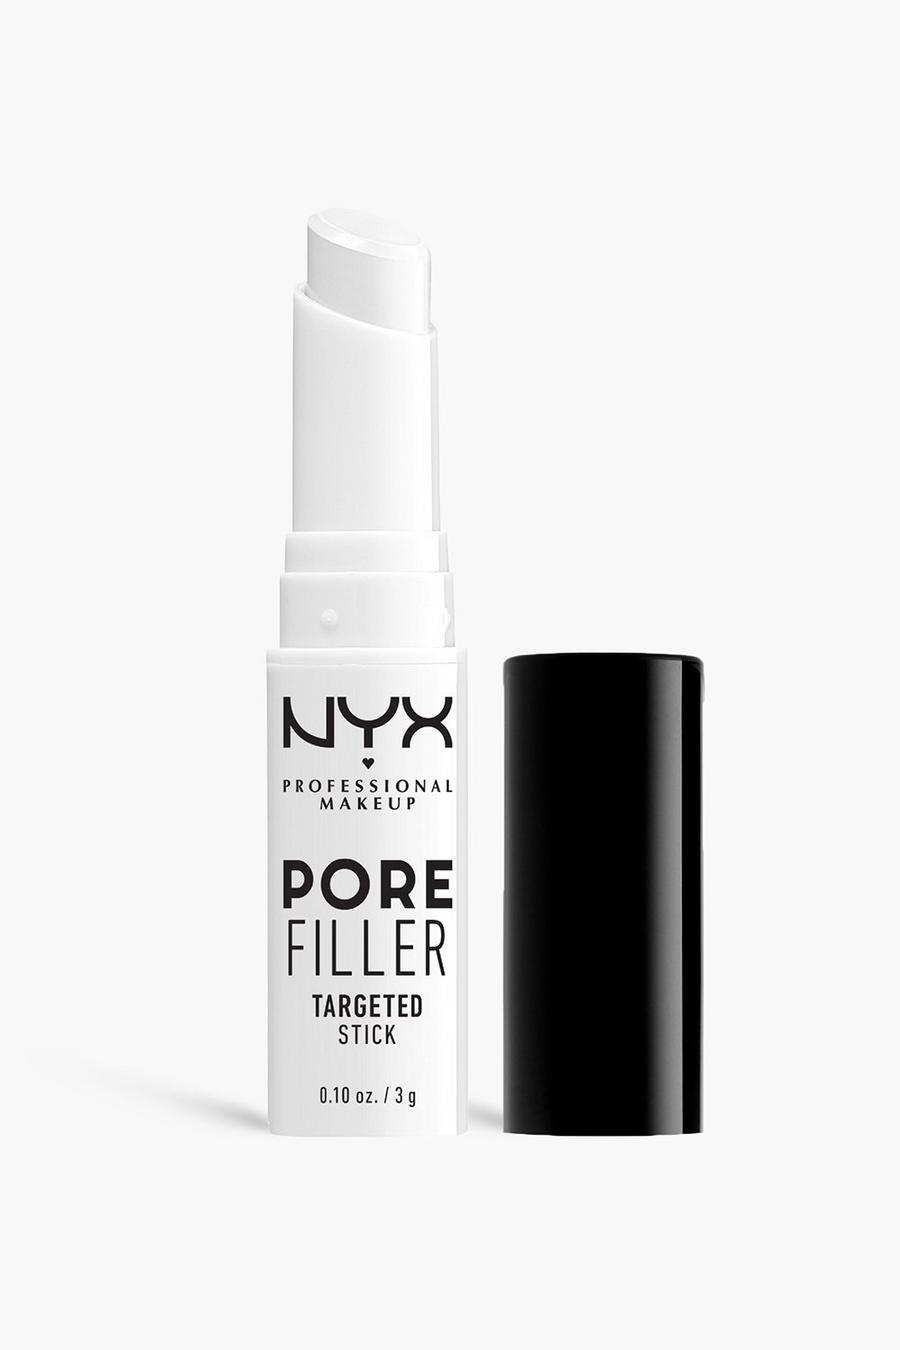 Clear transparent NYX Professional Makeup Blurring Vitamin E Infused Pore Filler Face Primer Stick